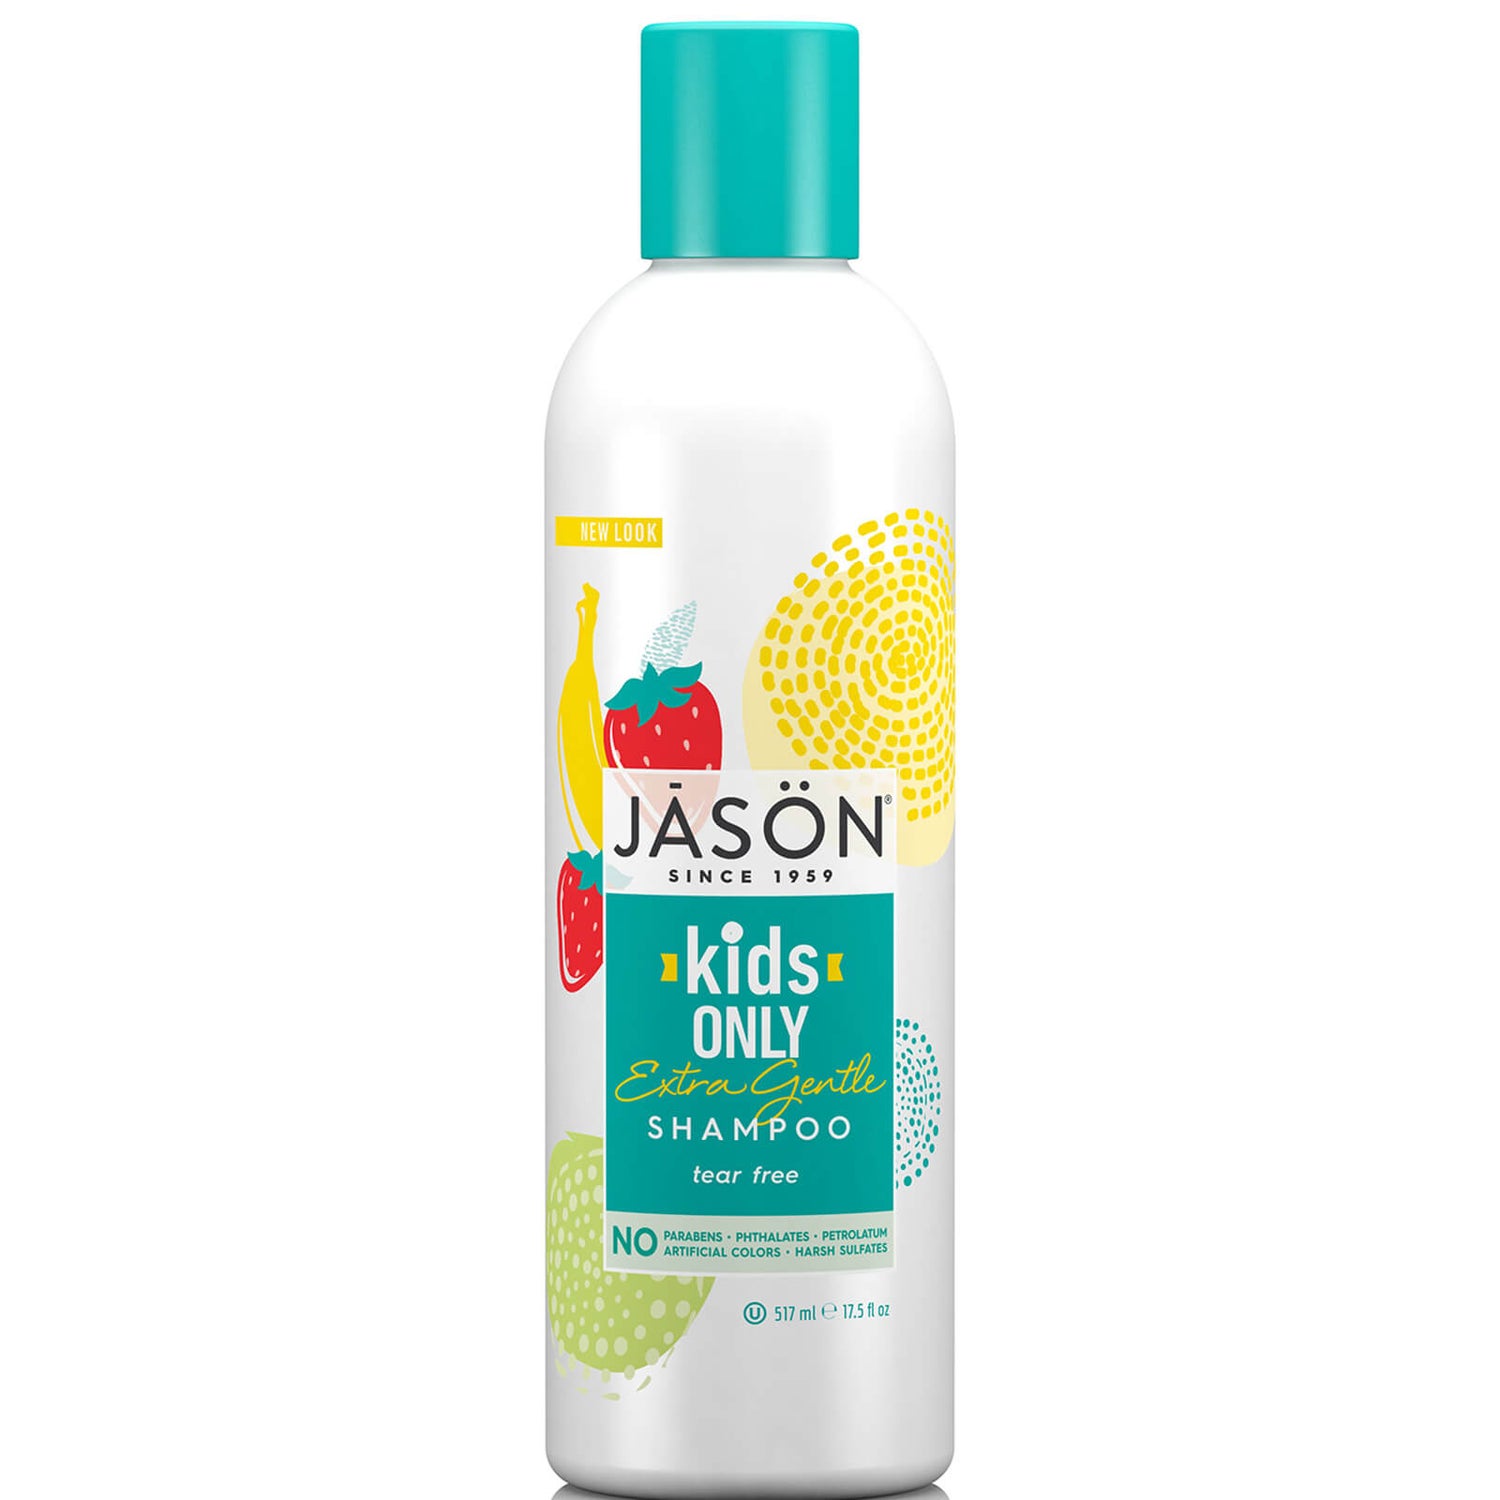 JASON Kids Only Extra Gentle Shampoo 517 ml